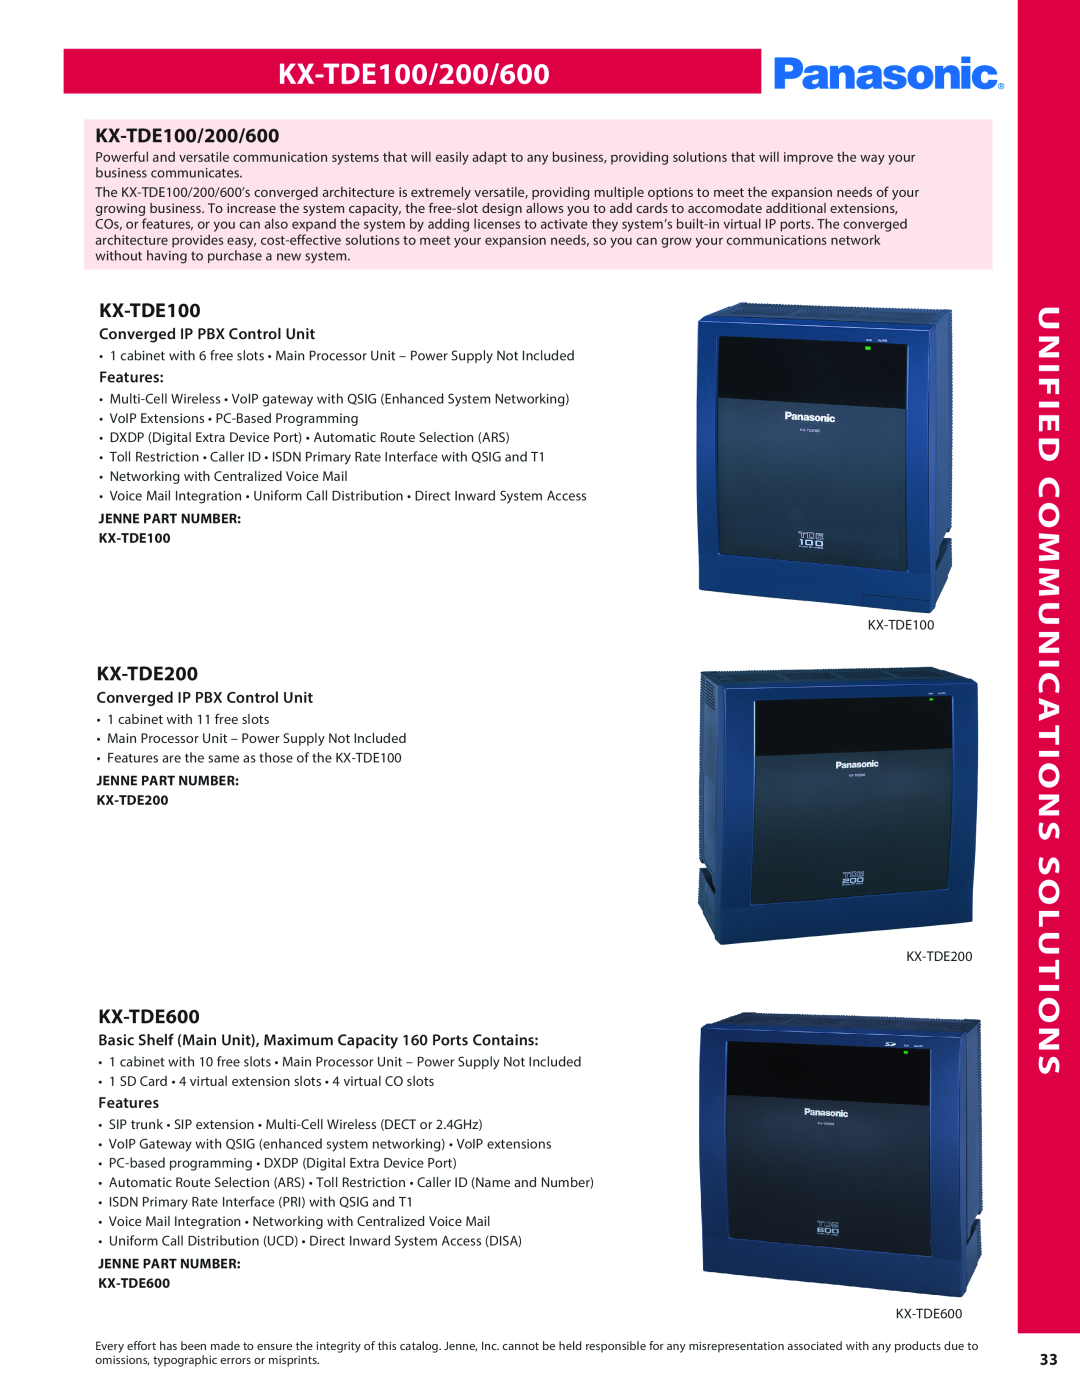 Panasonic PMPU2000 manual Unified Communications Solutions, KX-TDE100/200/600, Converged IP PBX Control Unit, Features 